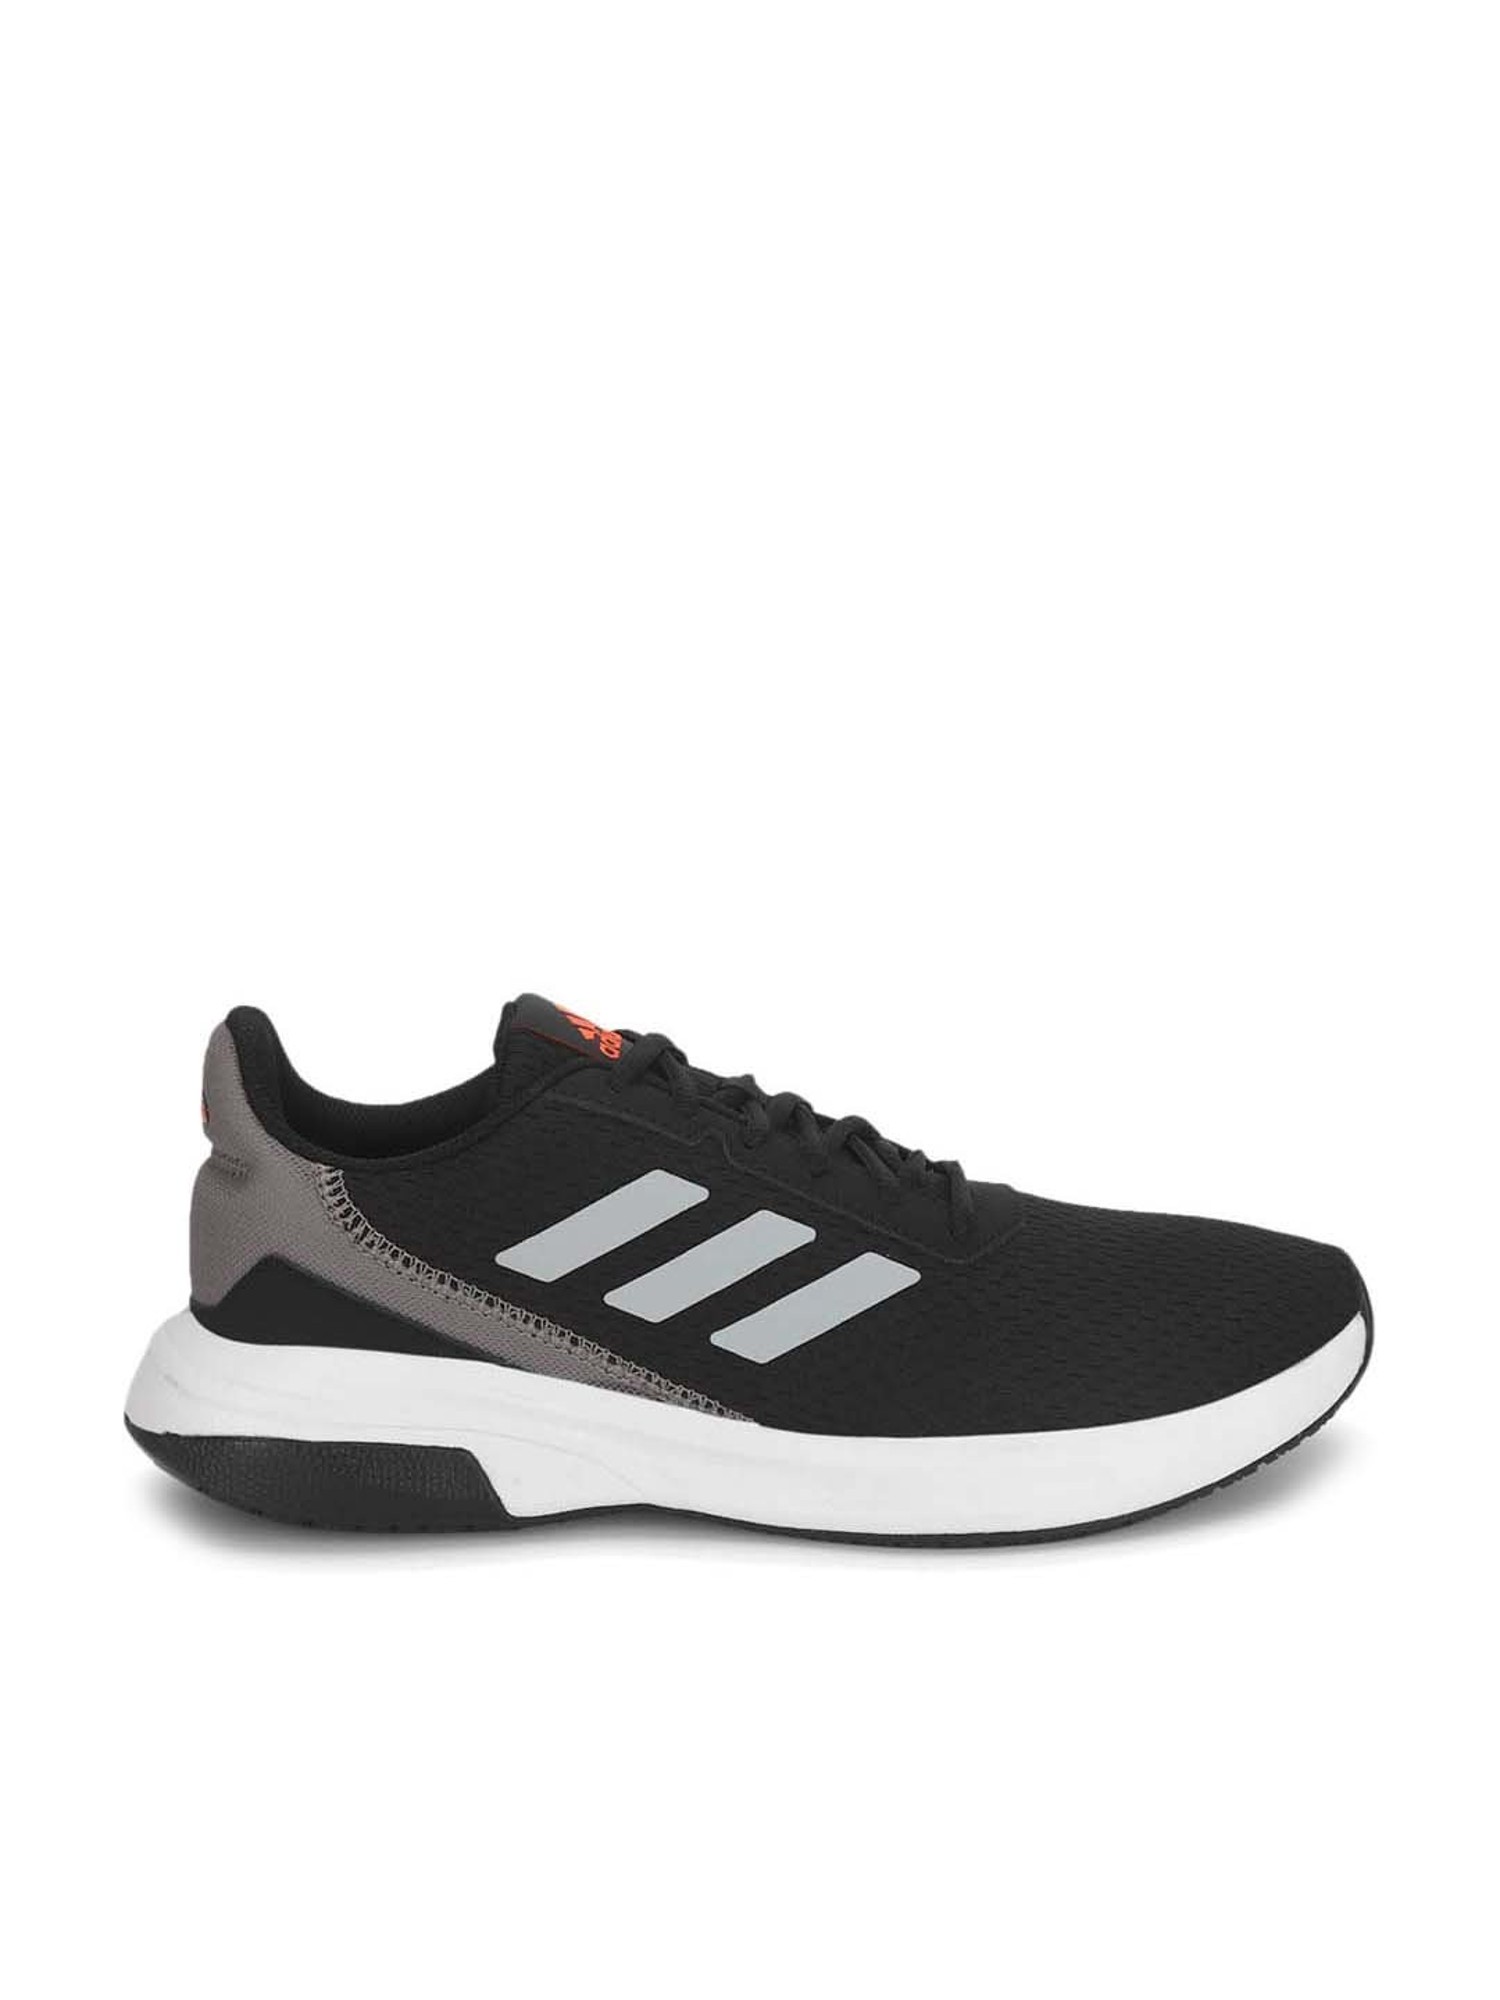 Adidas Running Shoes YYJ 606004 Grey/ Black unisex | eBay